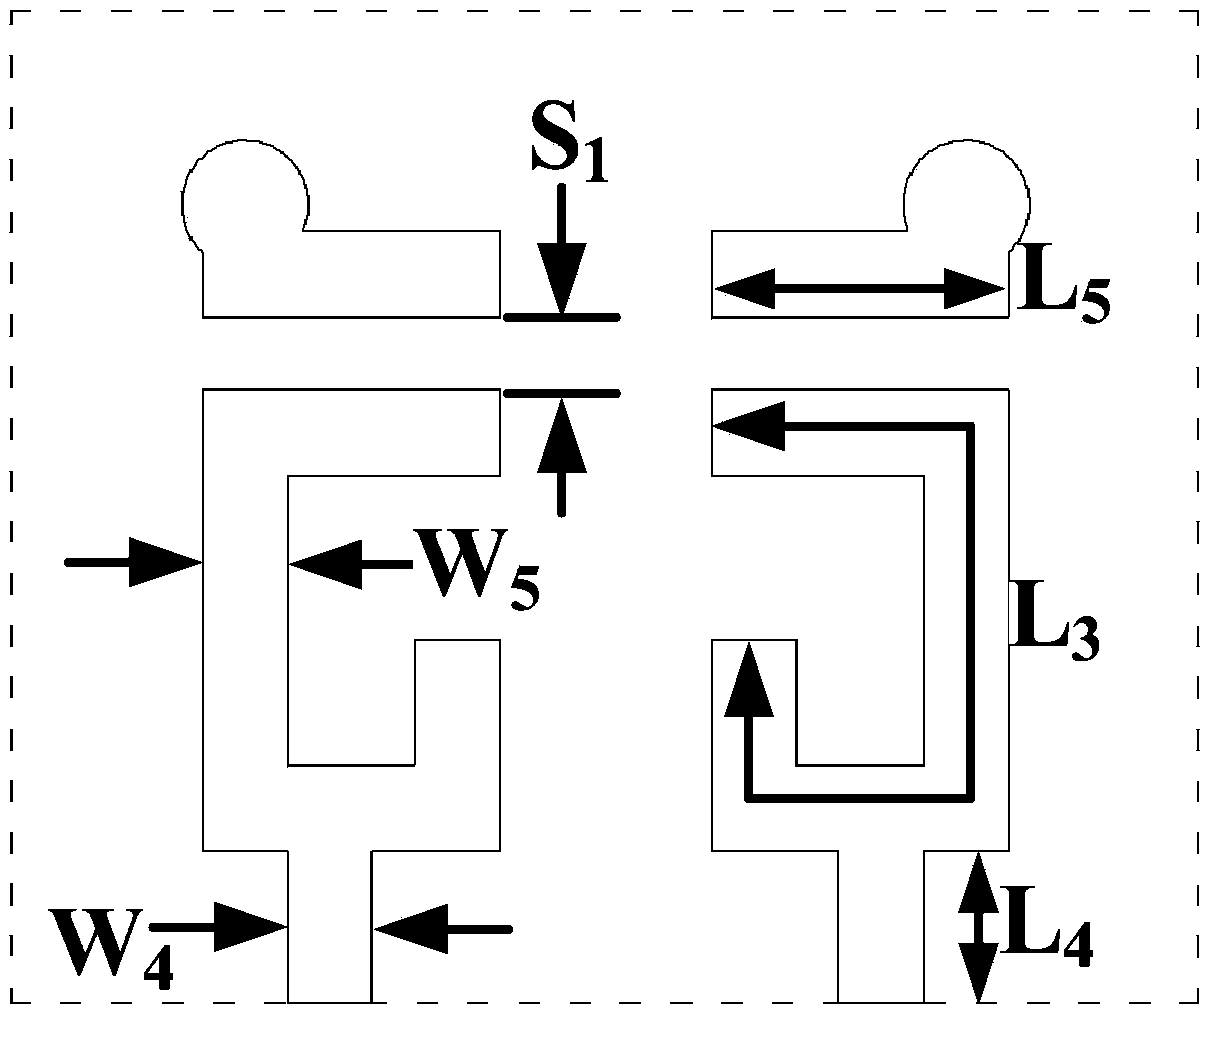 LTCC filtering Balun based on resonator coupling